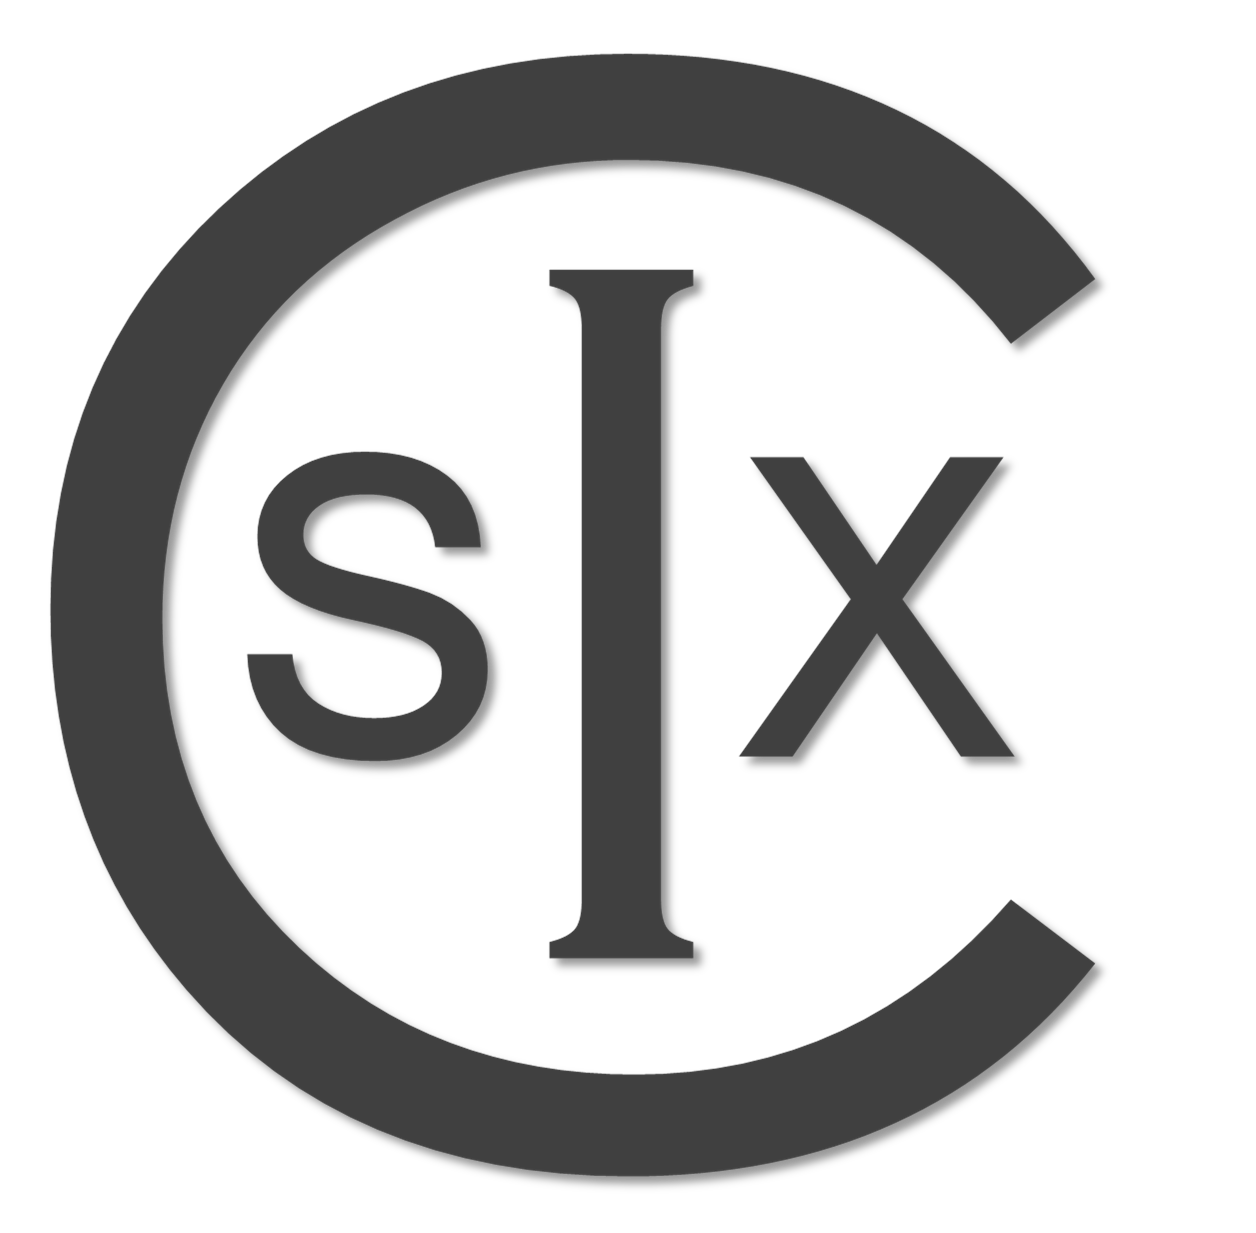 scix logo 1